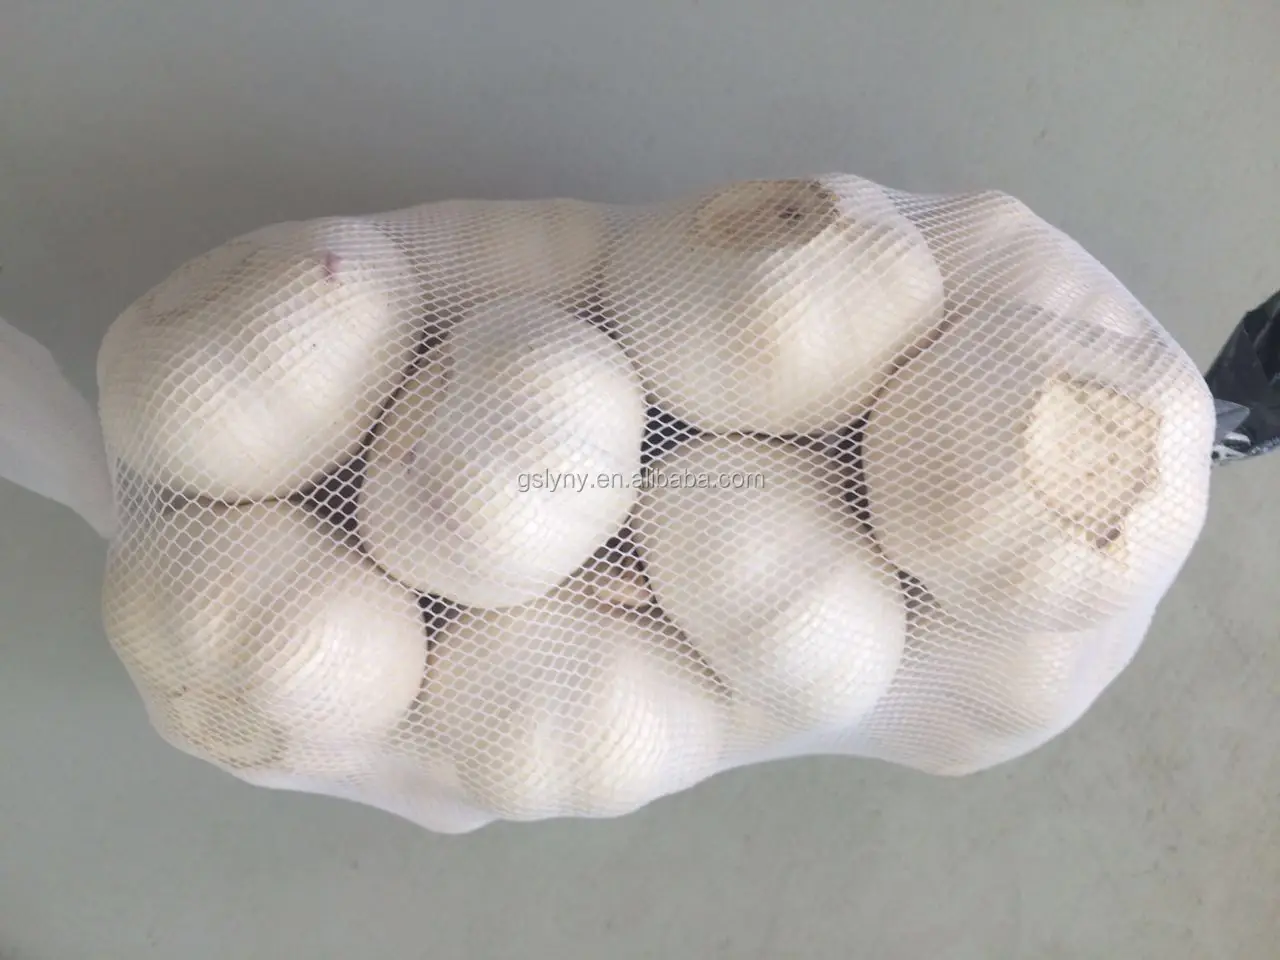 verse knoflook en gember importeur van verse knoflook normale witte, zuivere witte knoflookprijs in China